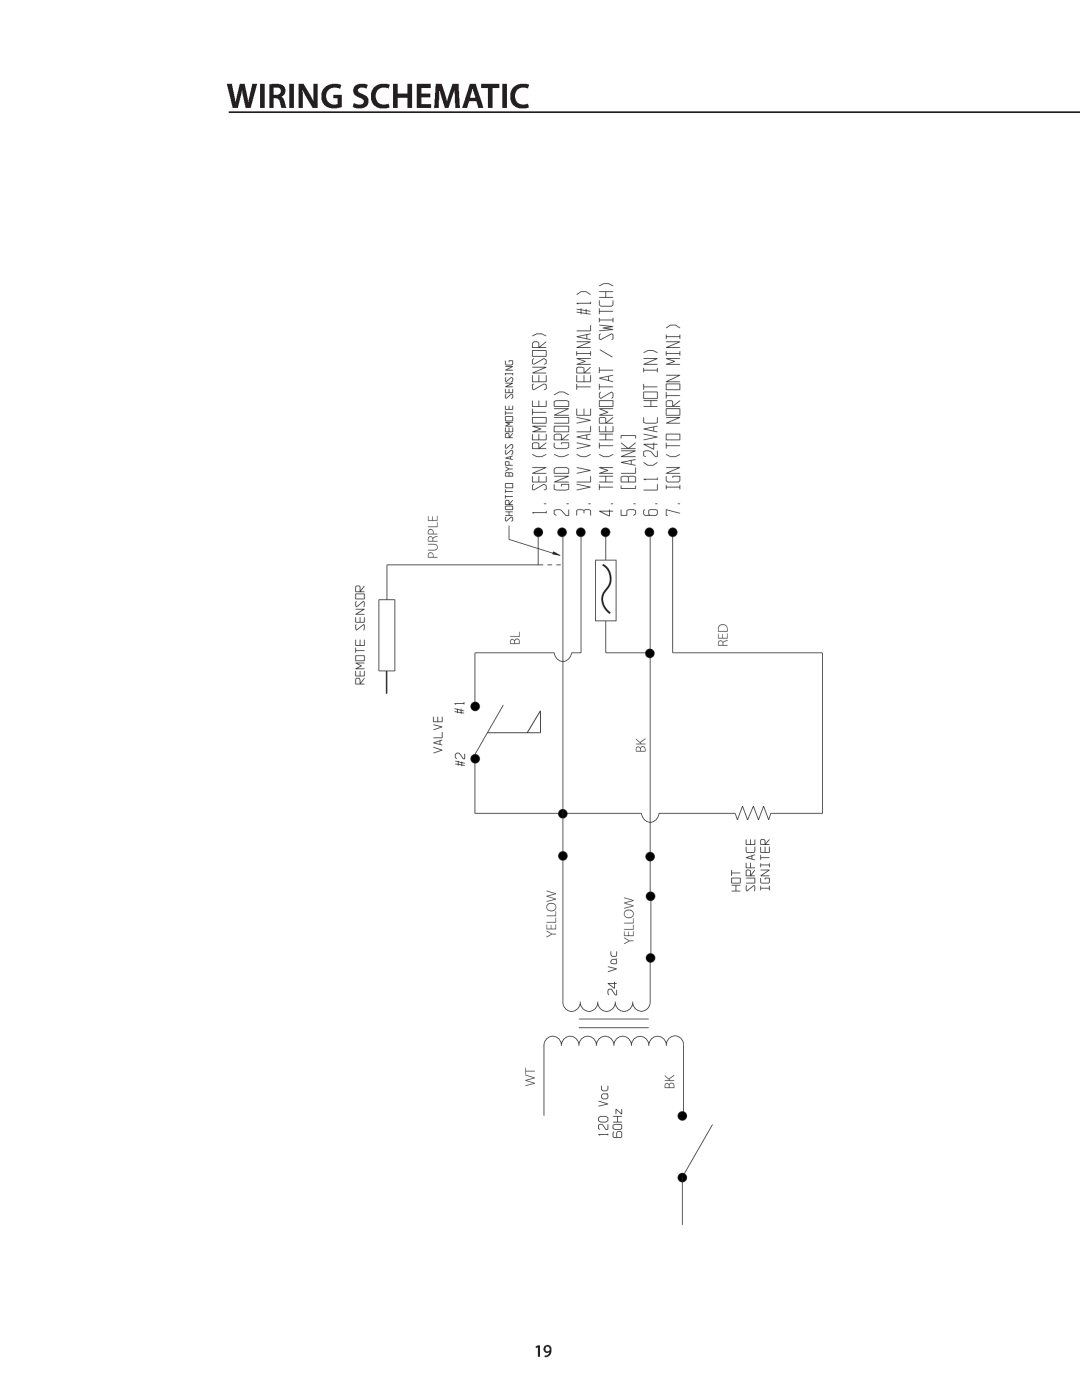 DCS DRH48N installation instructions Wiring Schematic, Purple Bl, Red Bk, Yellow 